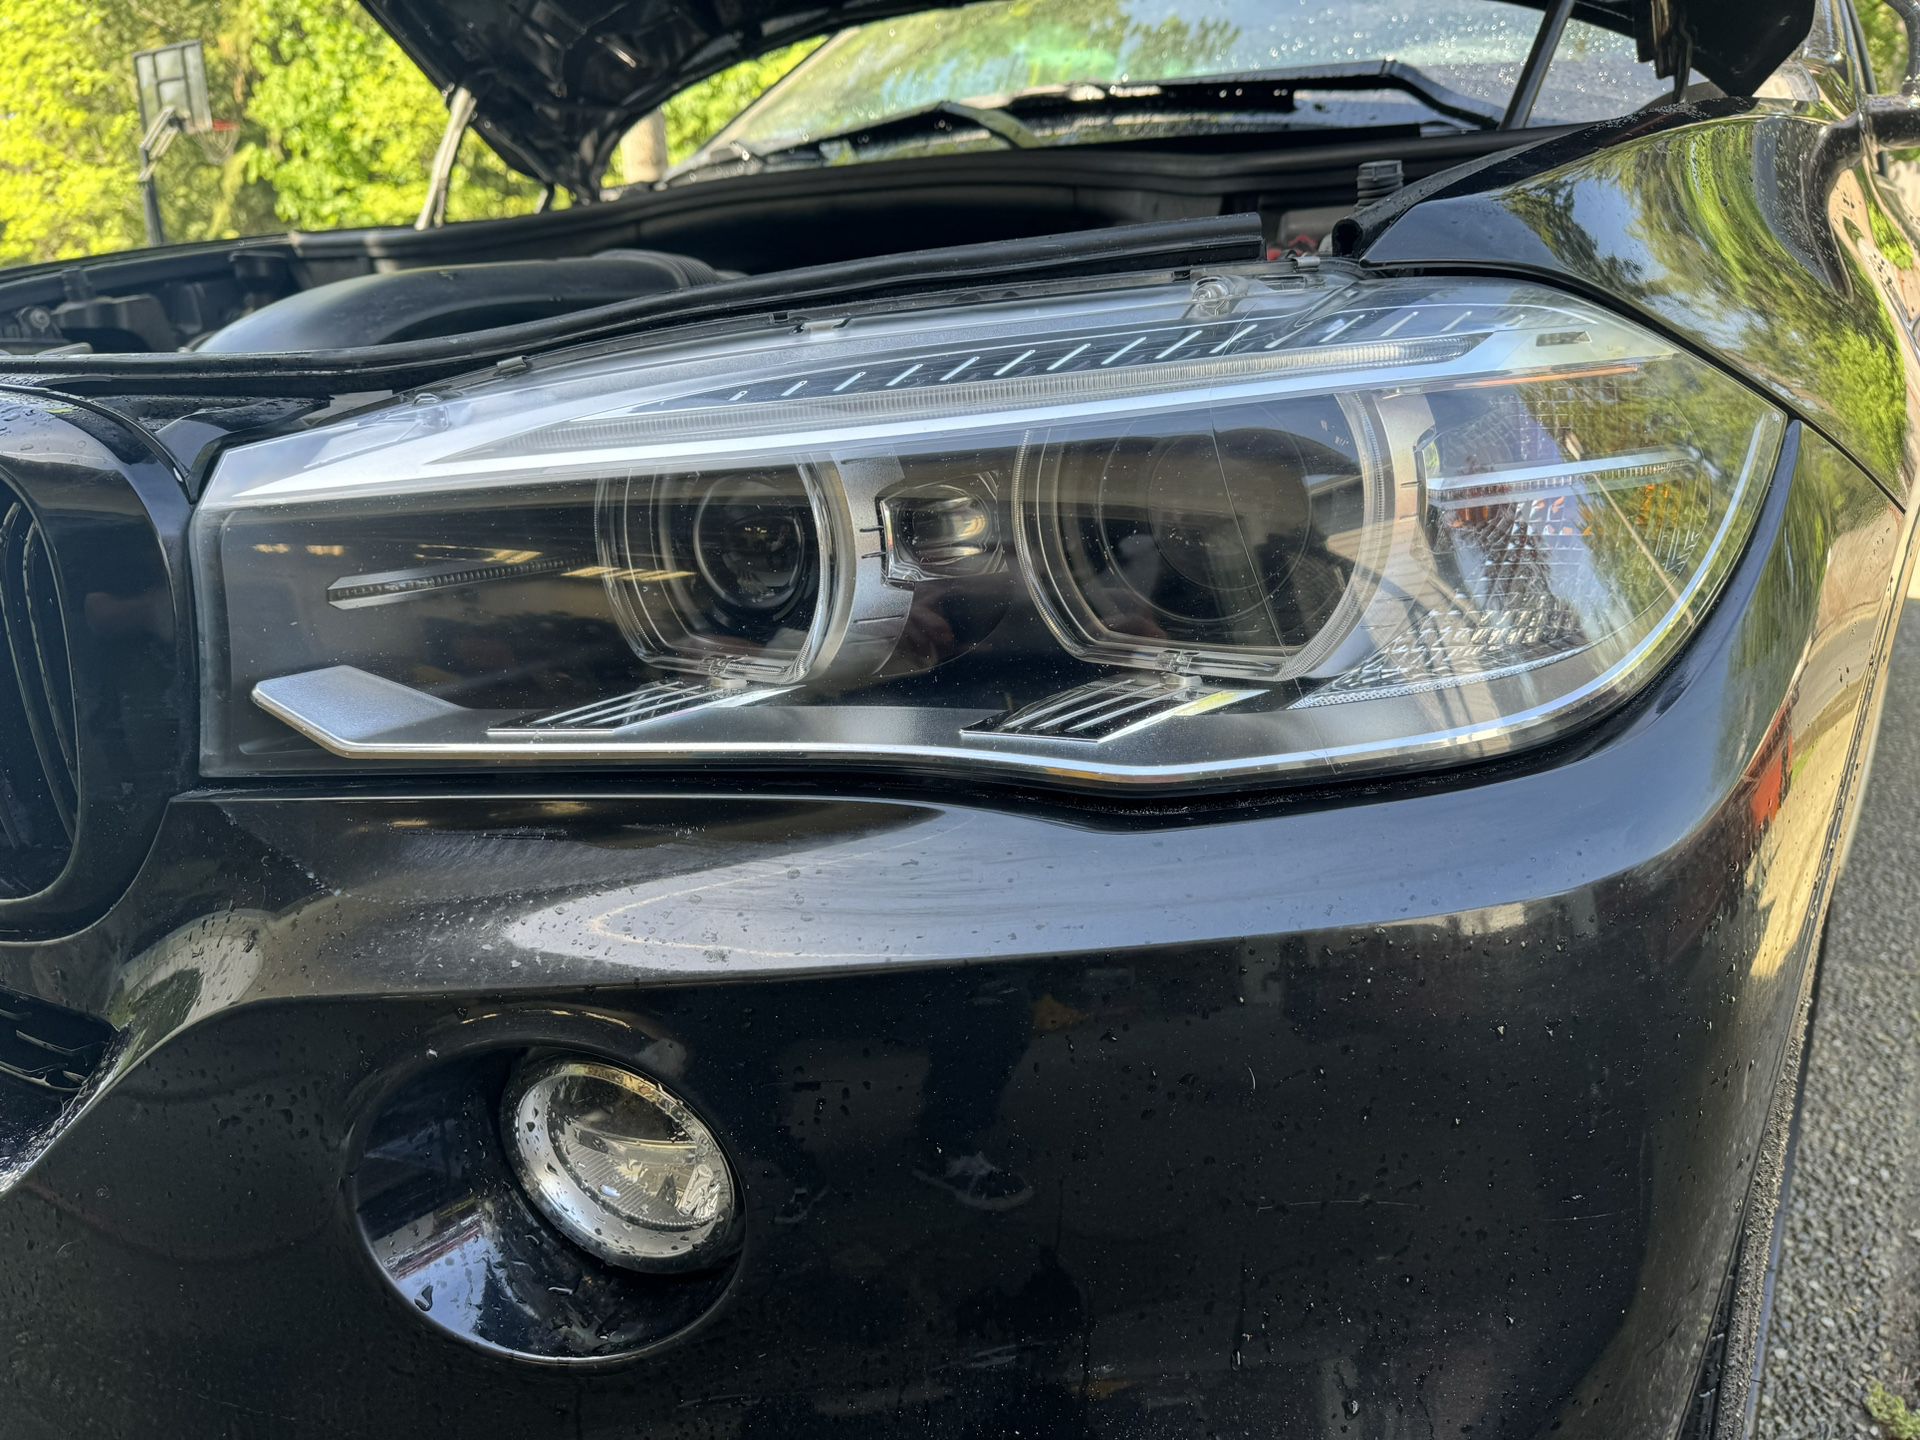 2014 BMW X5 Headlights And Tail Lights 